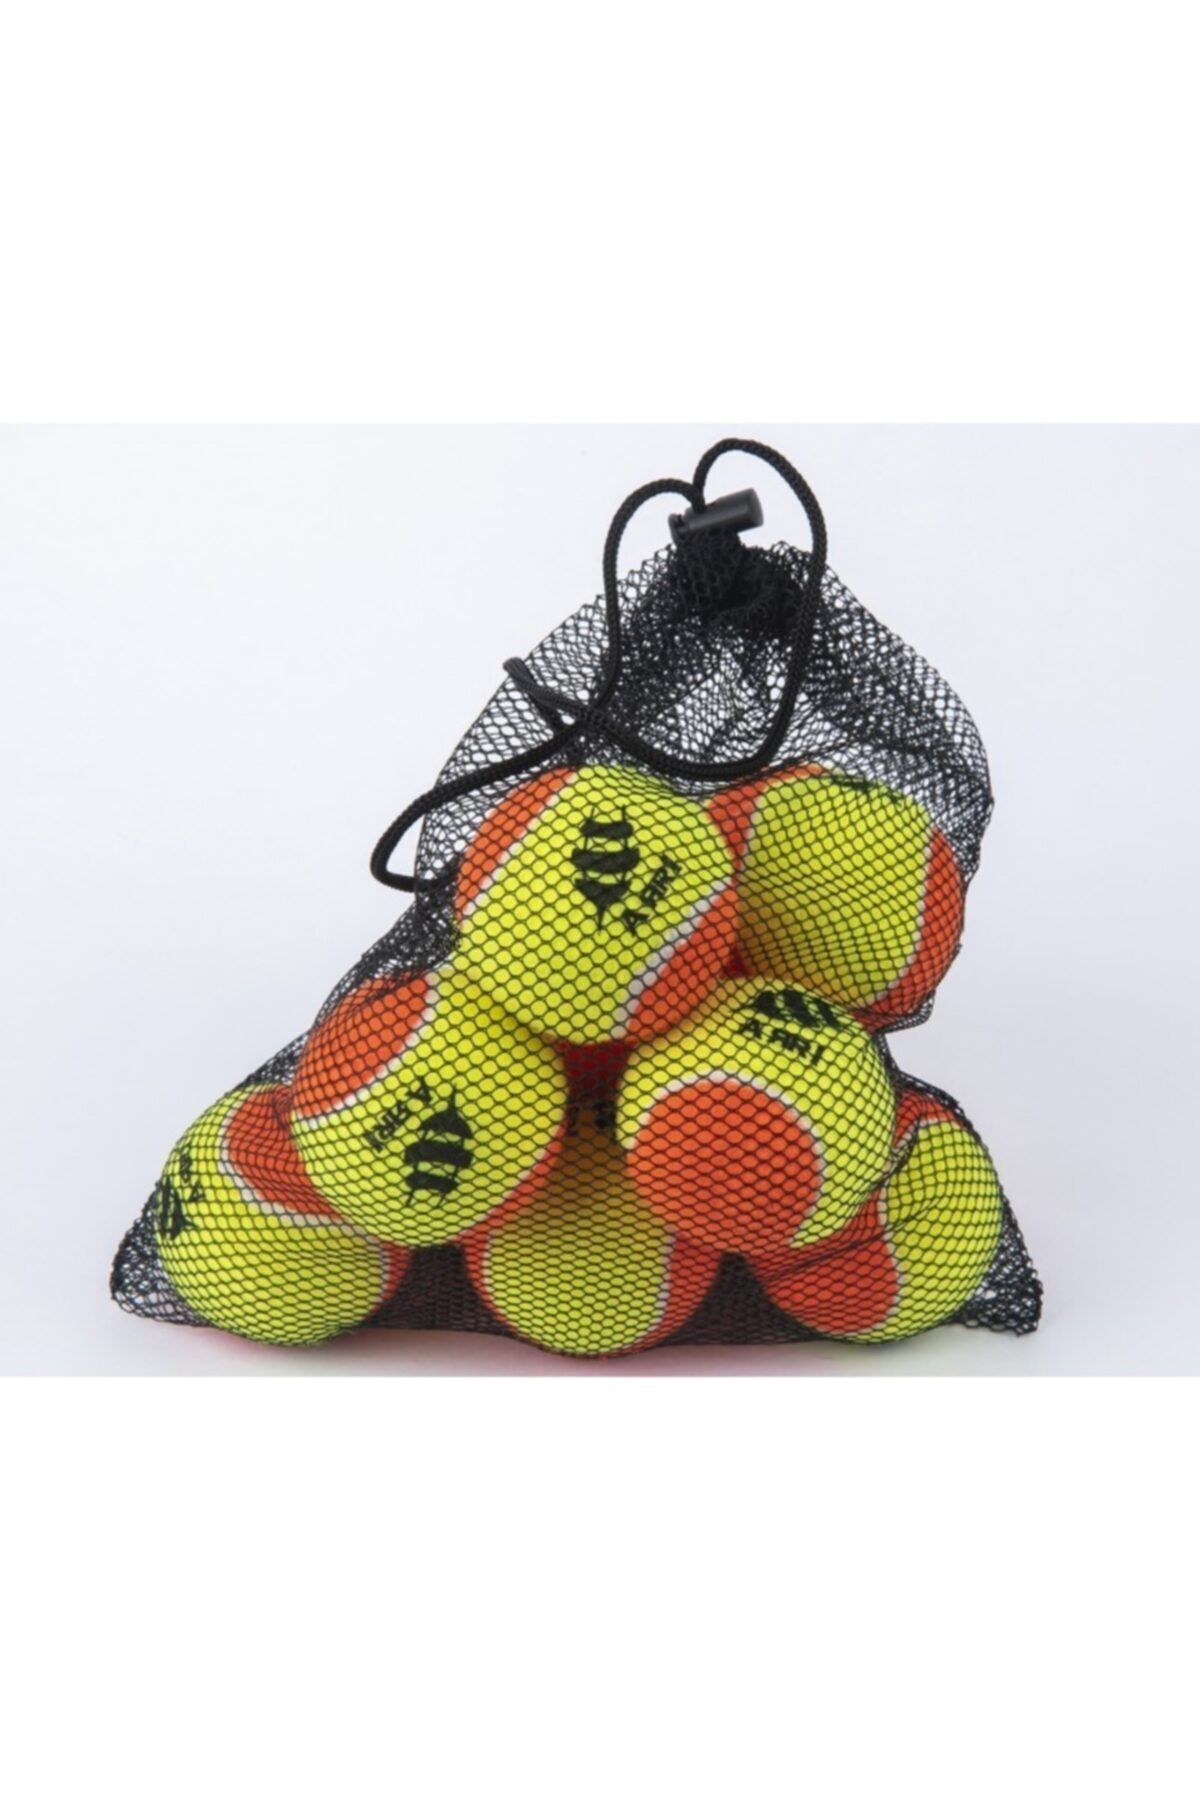 ArrıTenis 12 adet Turuncu  Tenis Topu Çocuk